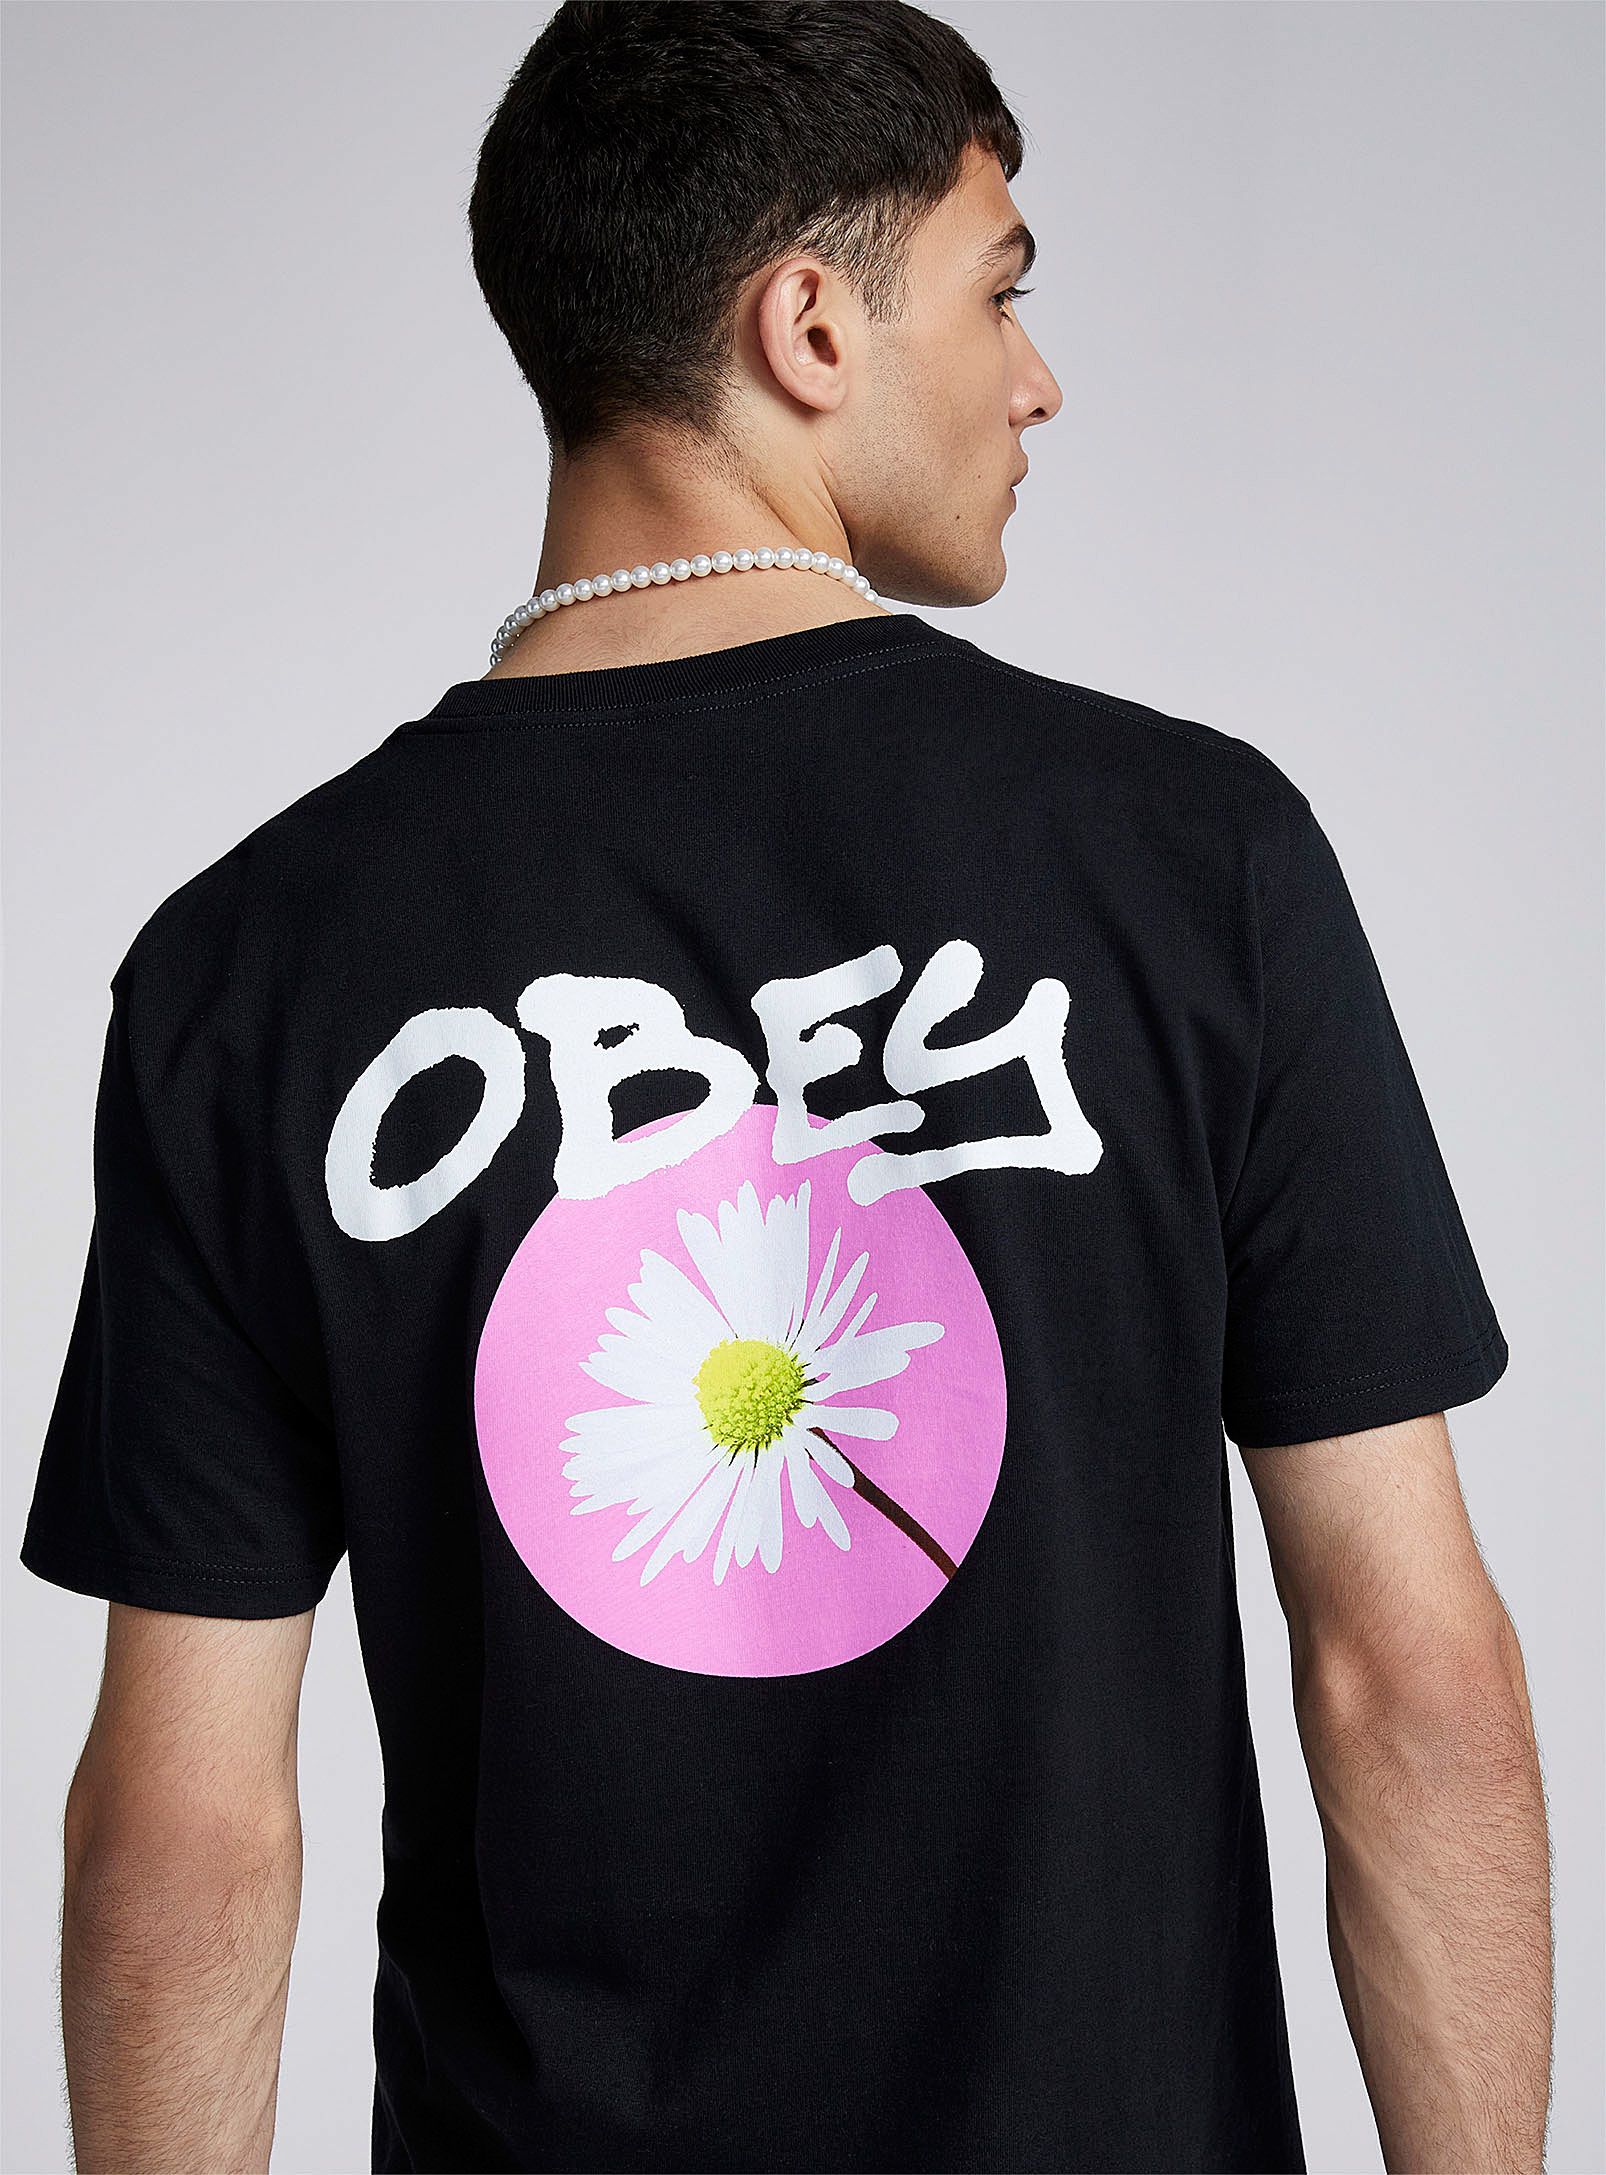 Obey - Men's Daisy spray T-shirt